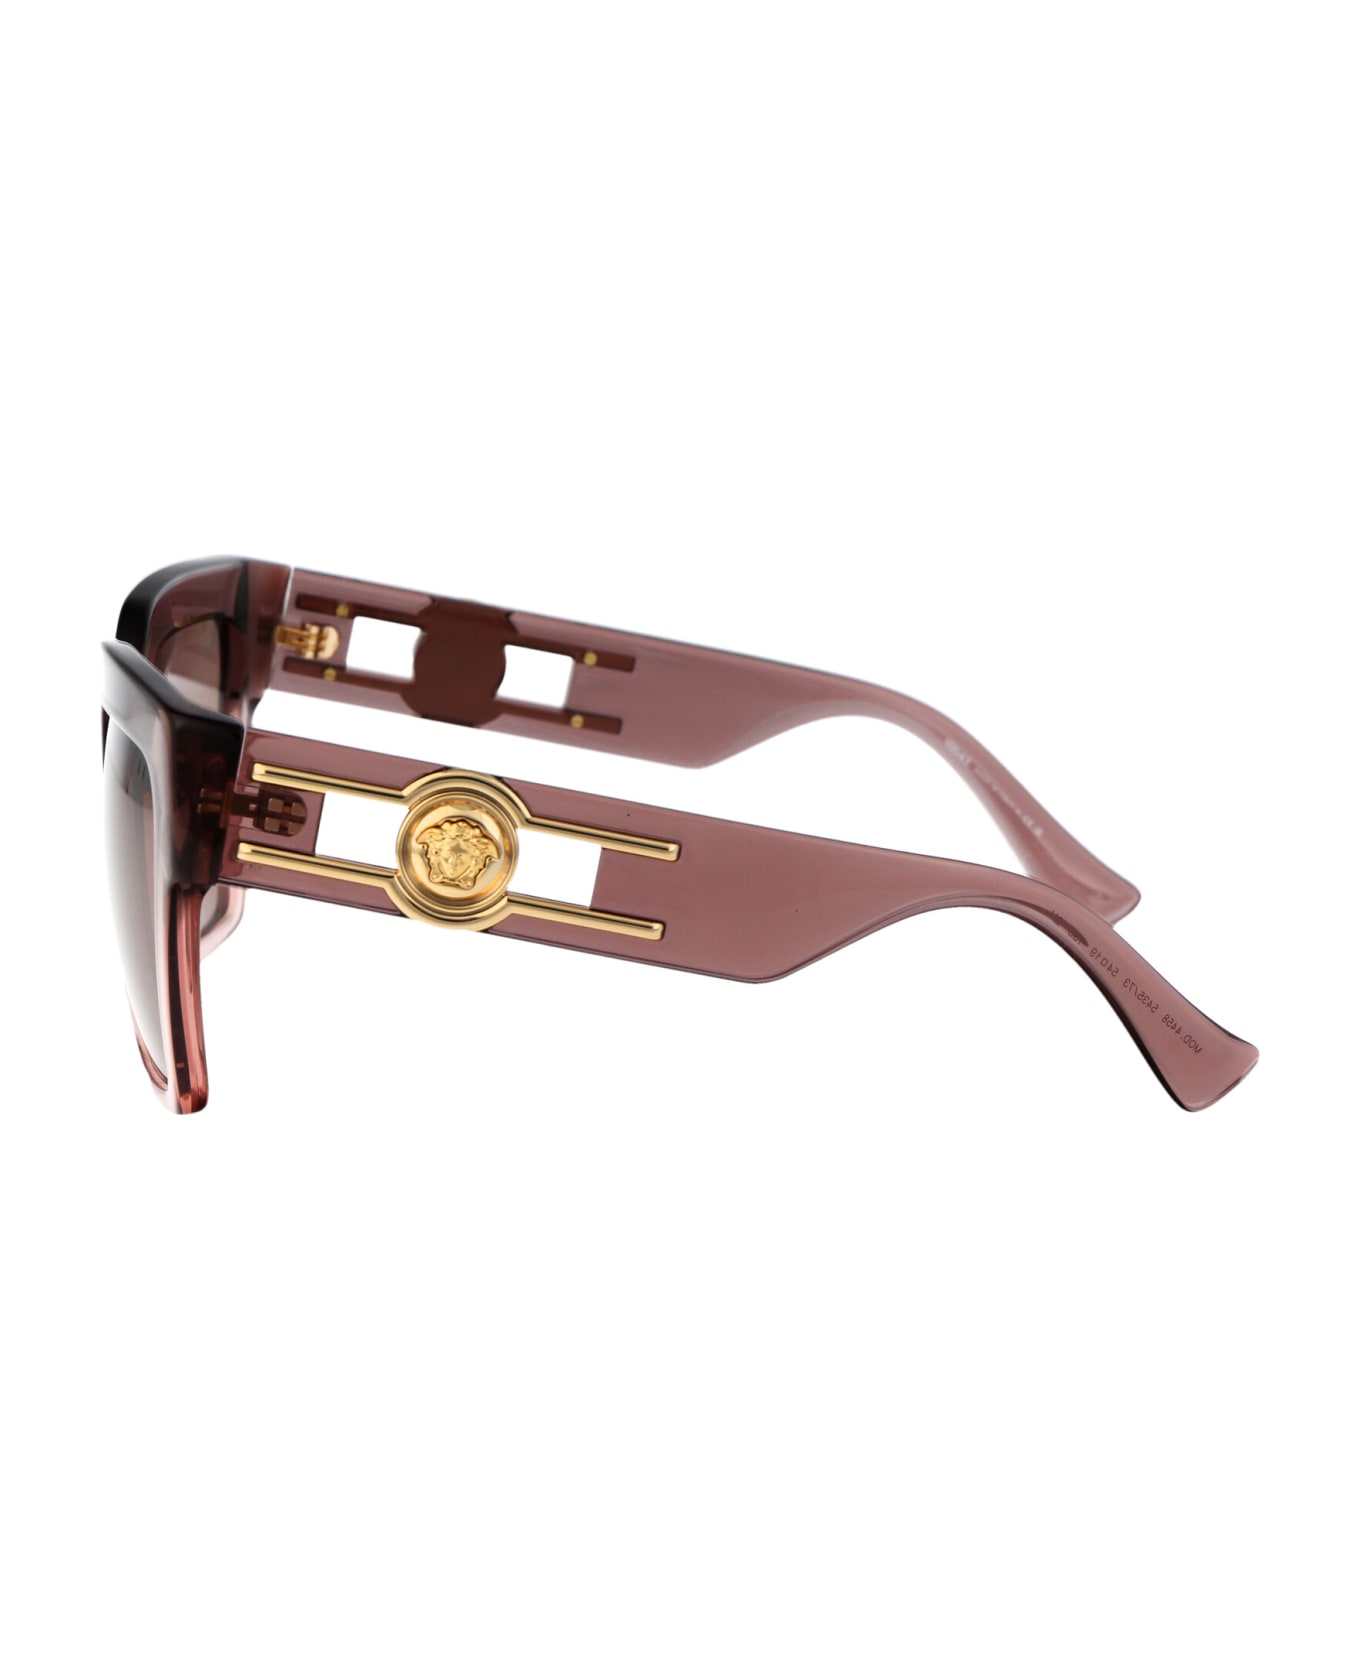 Versace Eyewear 0ve4458 Sunglasses - 543573 Brown Transparent